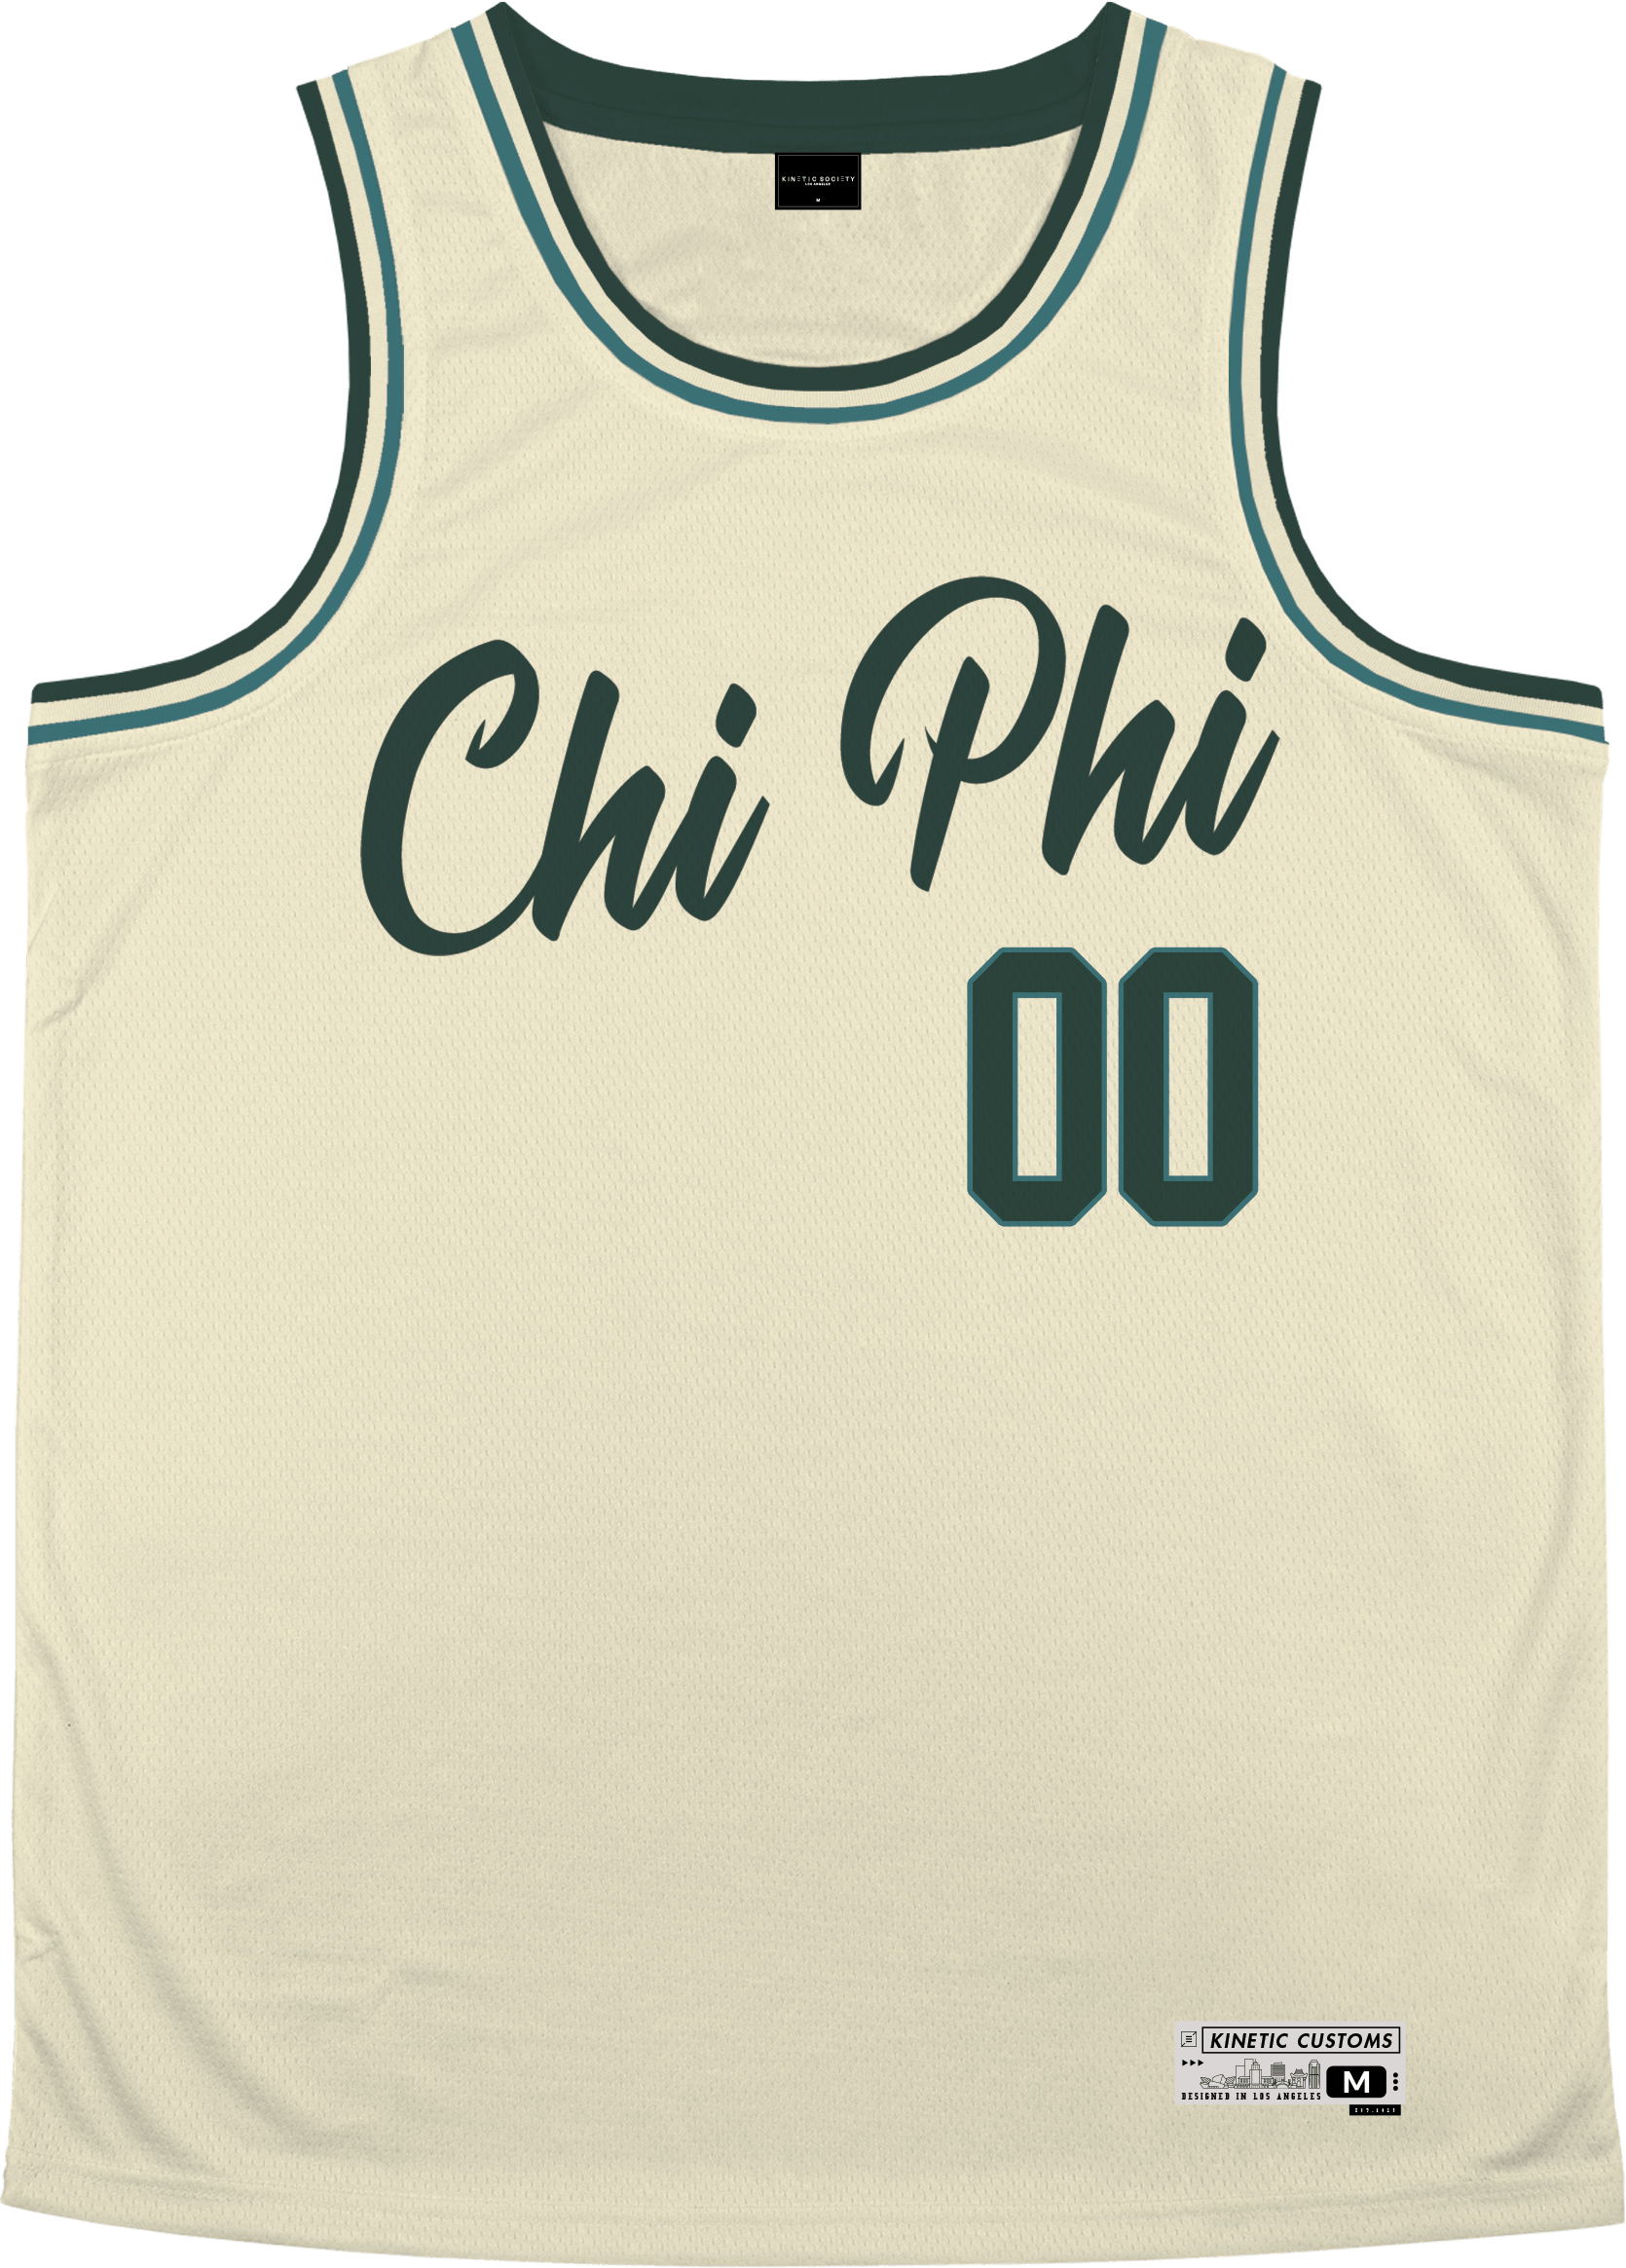 Chi Phi - Buttercream Basketball Jersey - Kinetic Society